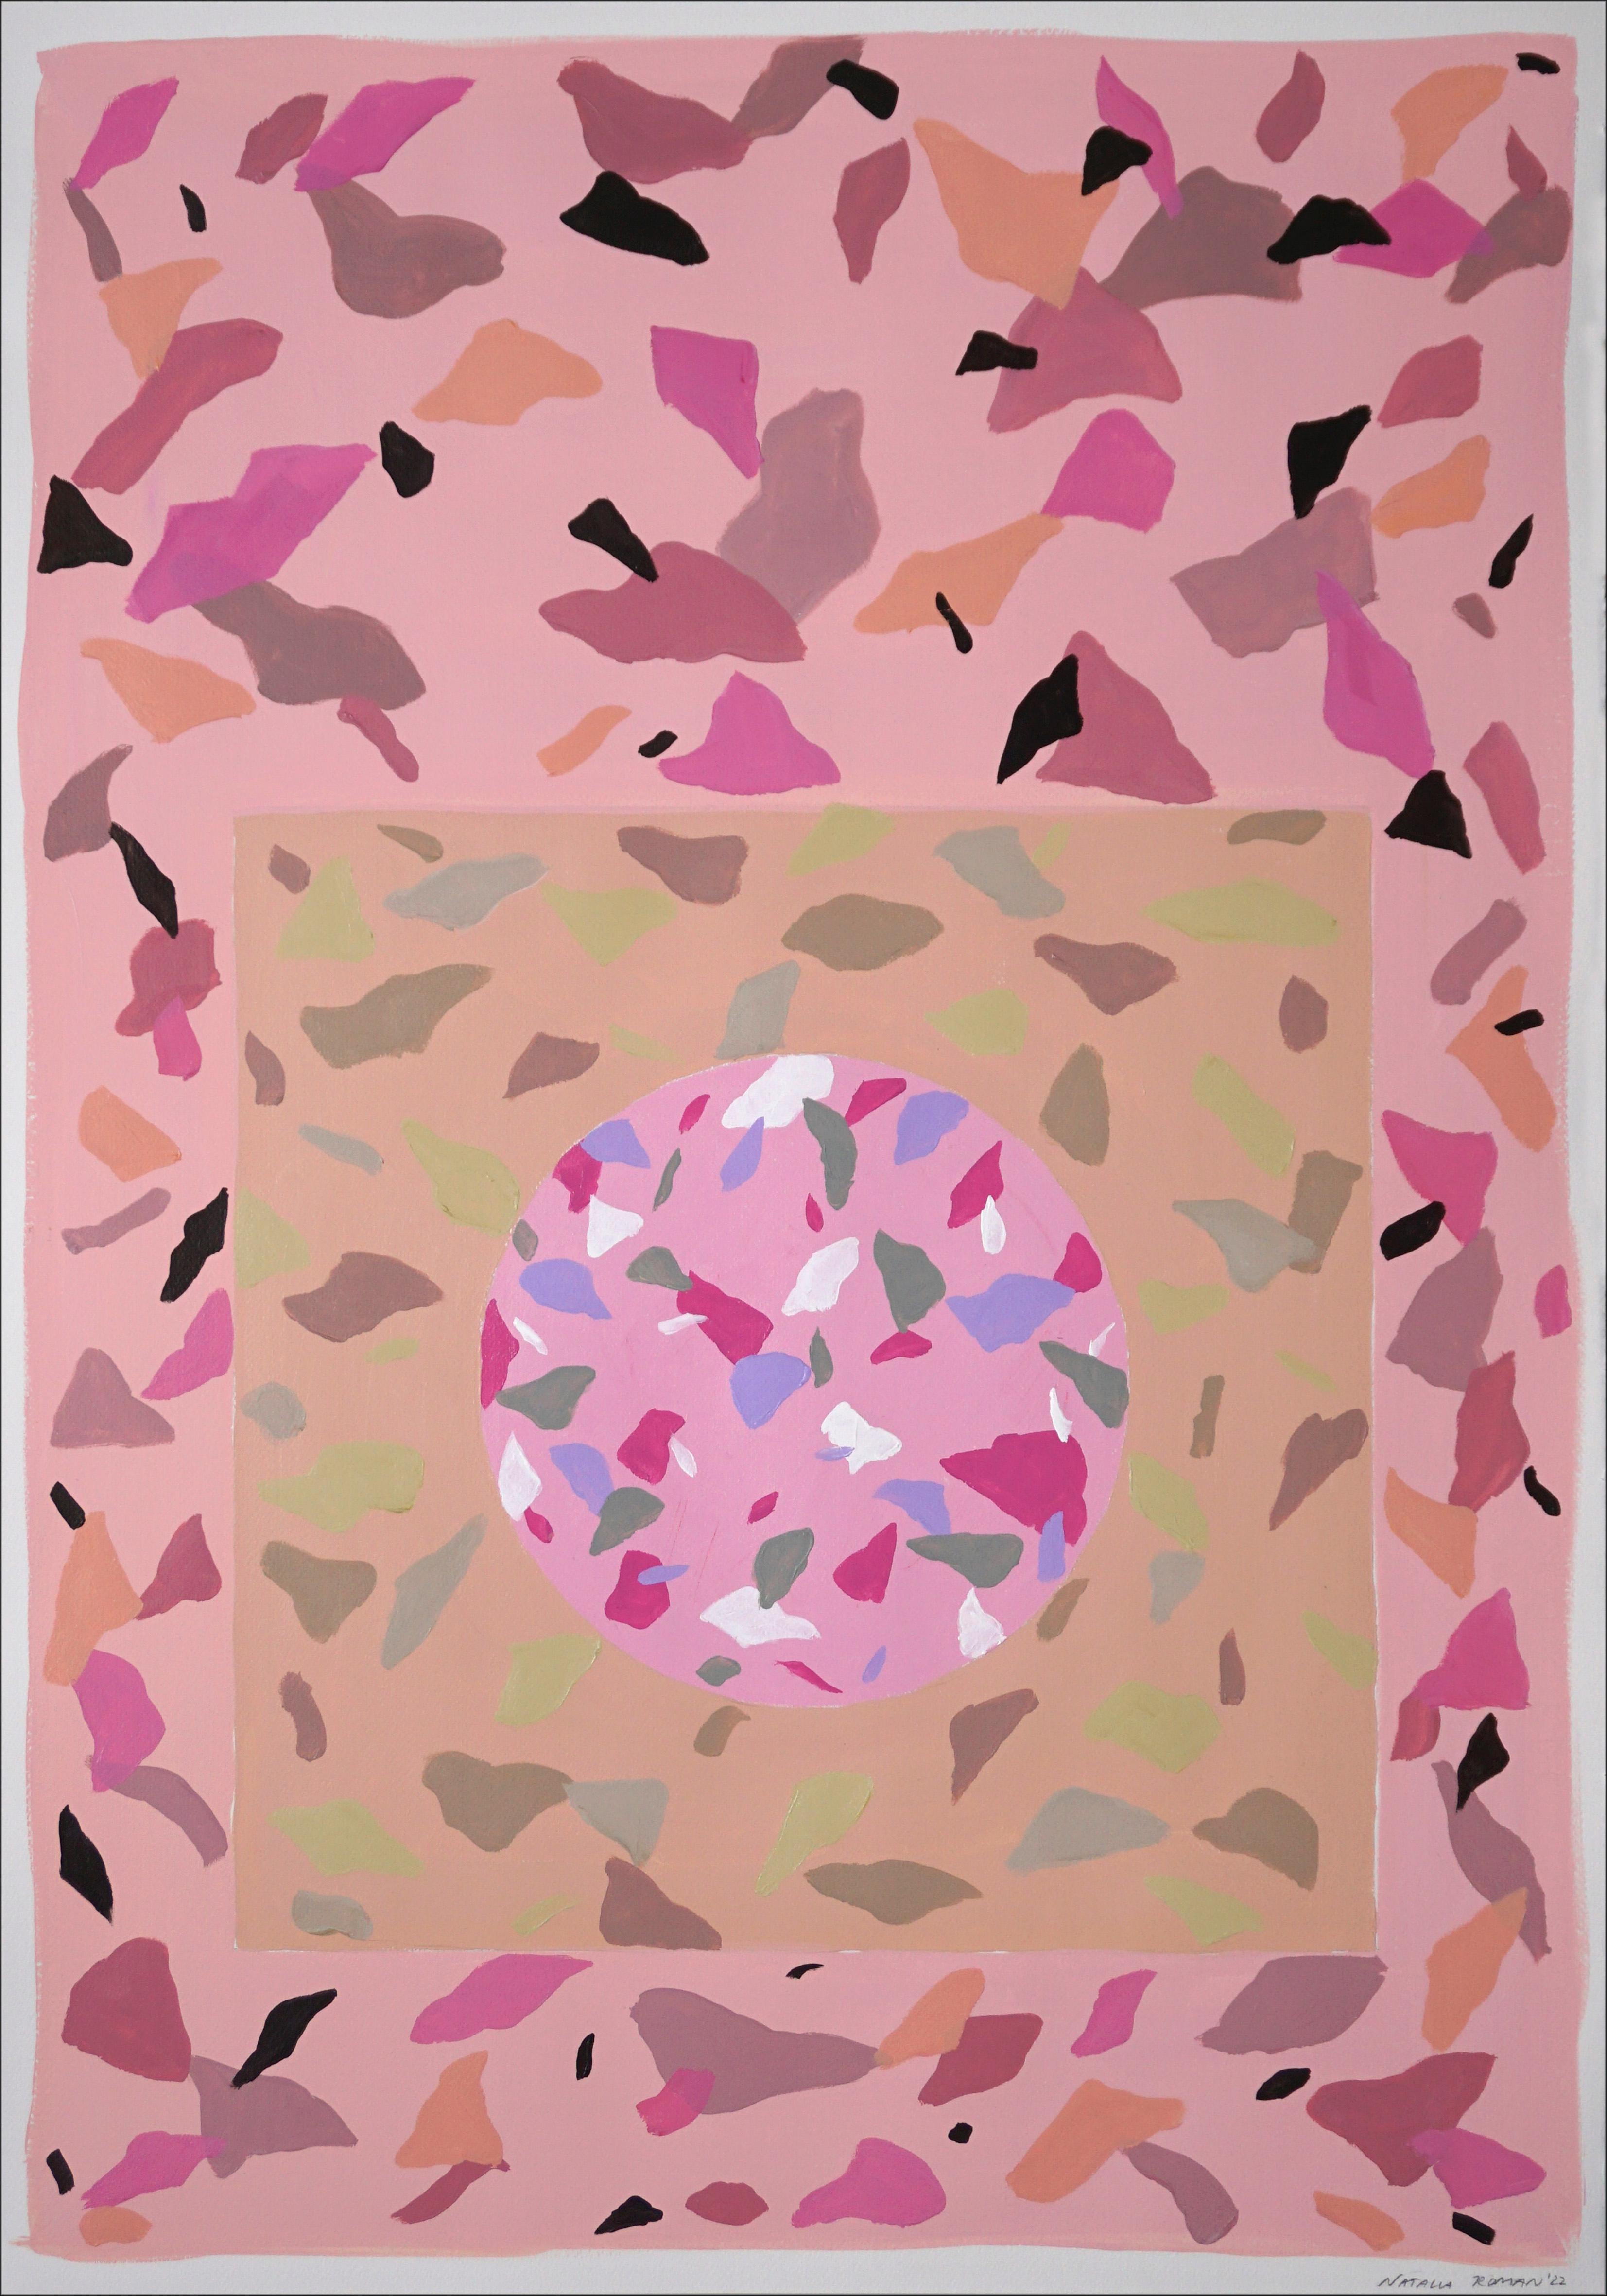 Natalia Roman Abstract Painting - Pastel Pink Shapes, Italian Terrazzo Tiles Inspiration in Soft Warm Skin Tones 